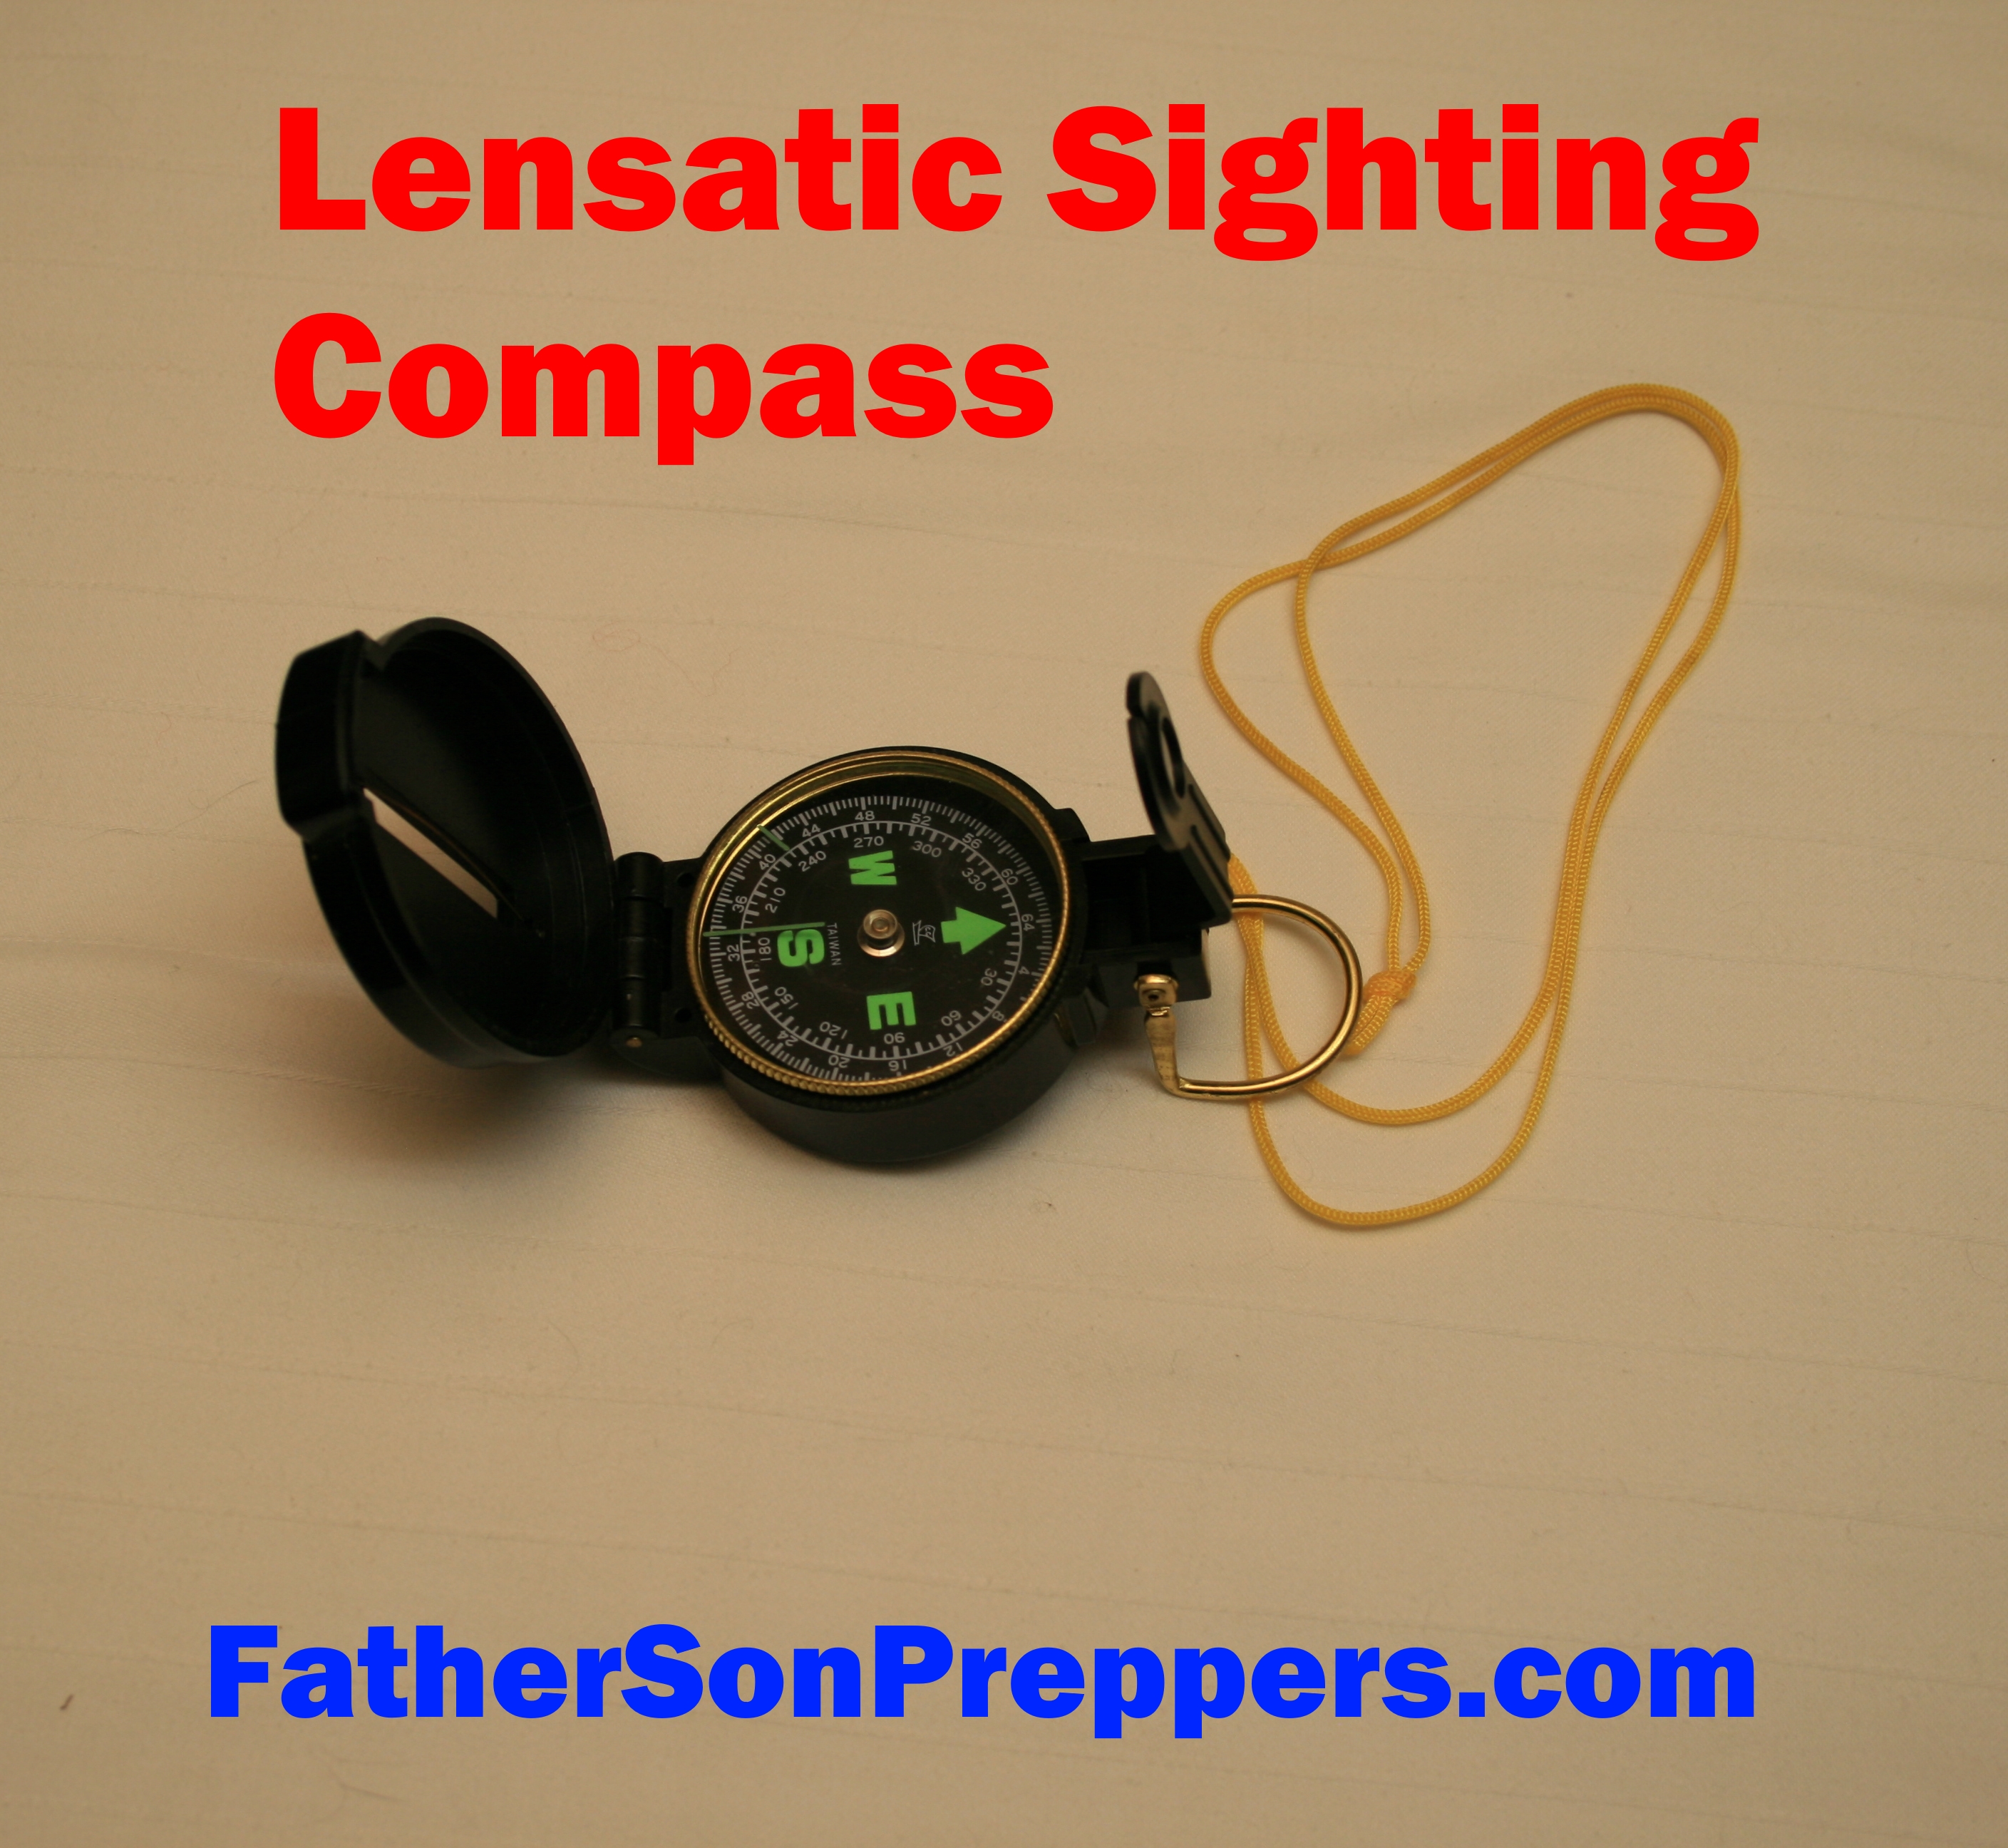 Lensatic Sighting Compass